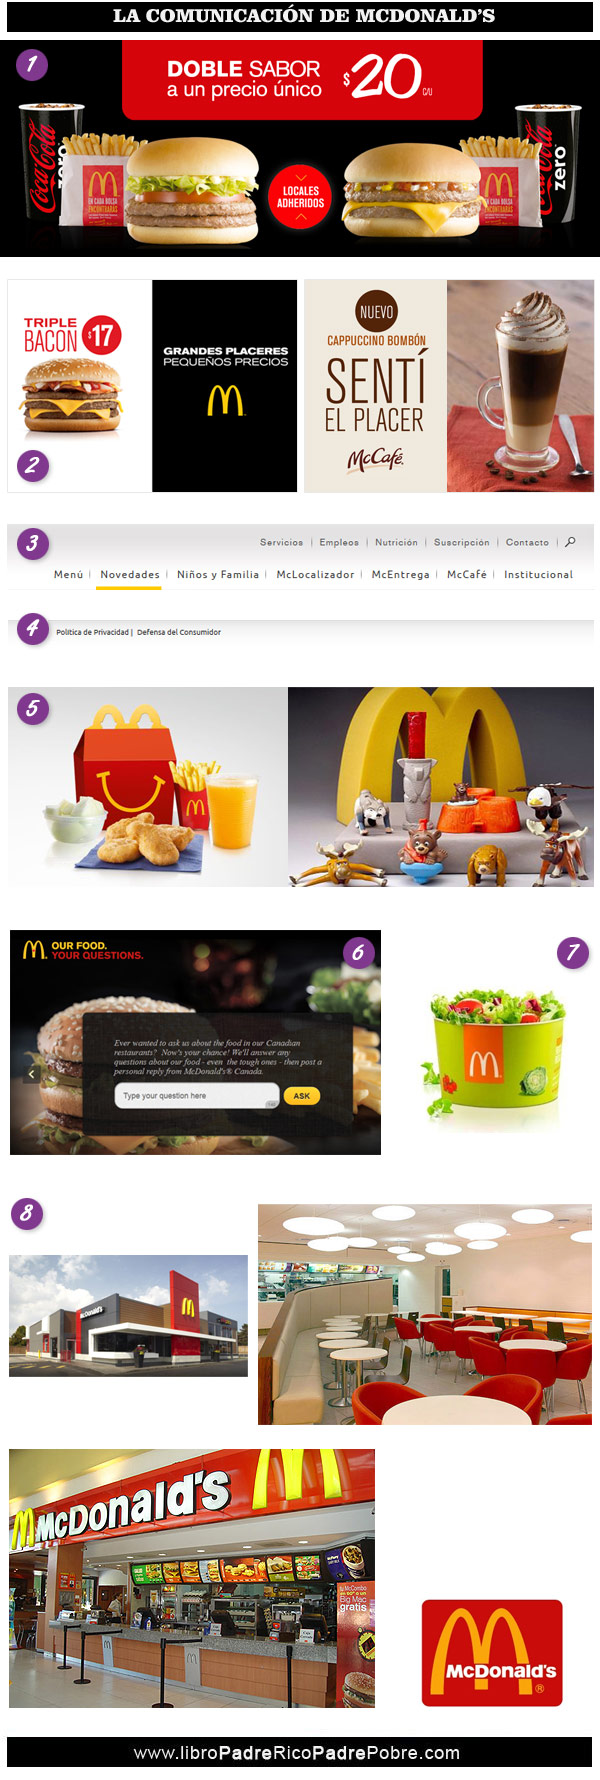 La comunicacion corporativa de McDonald's